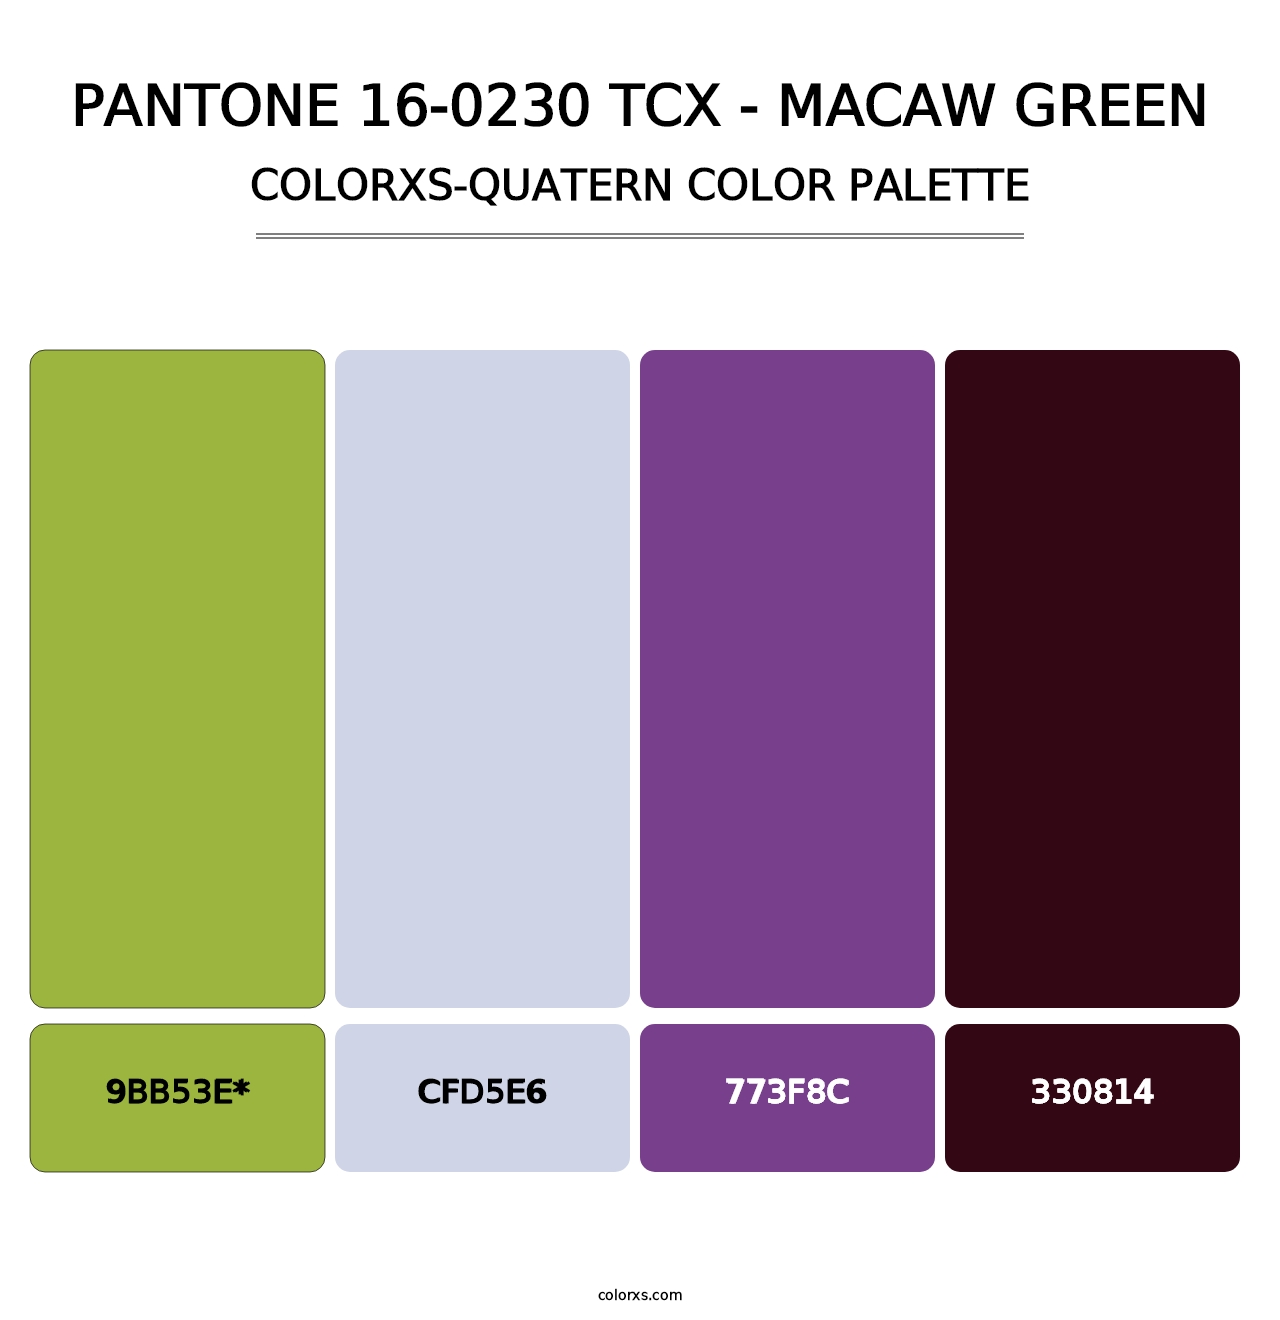 PANTONE 16-0230 TCX - Macaw Green - Colorxs Quatern Palette